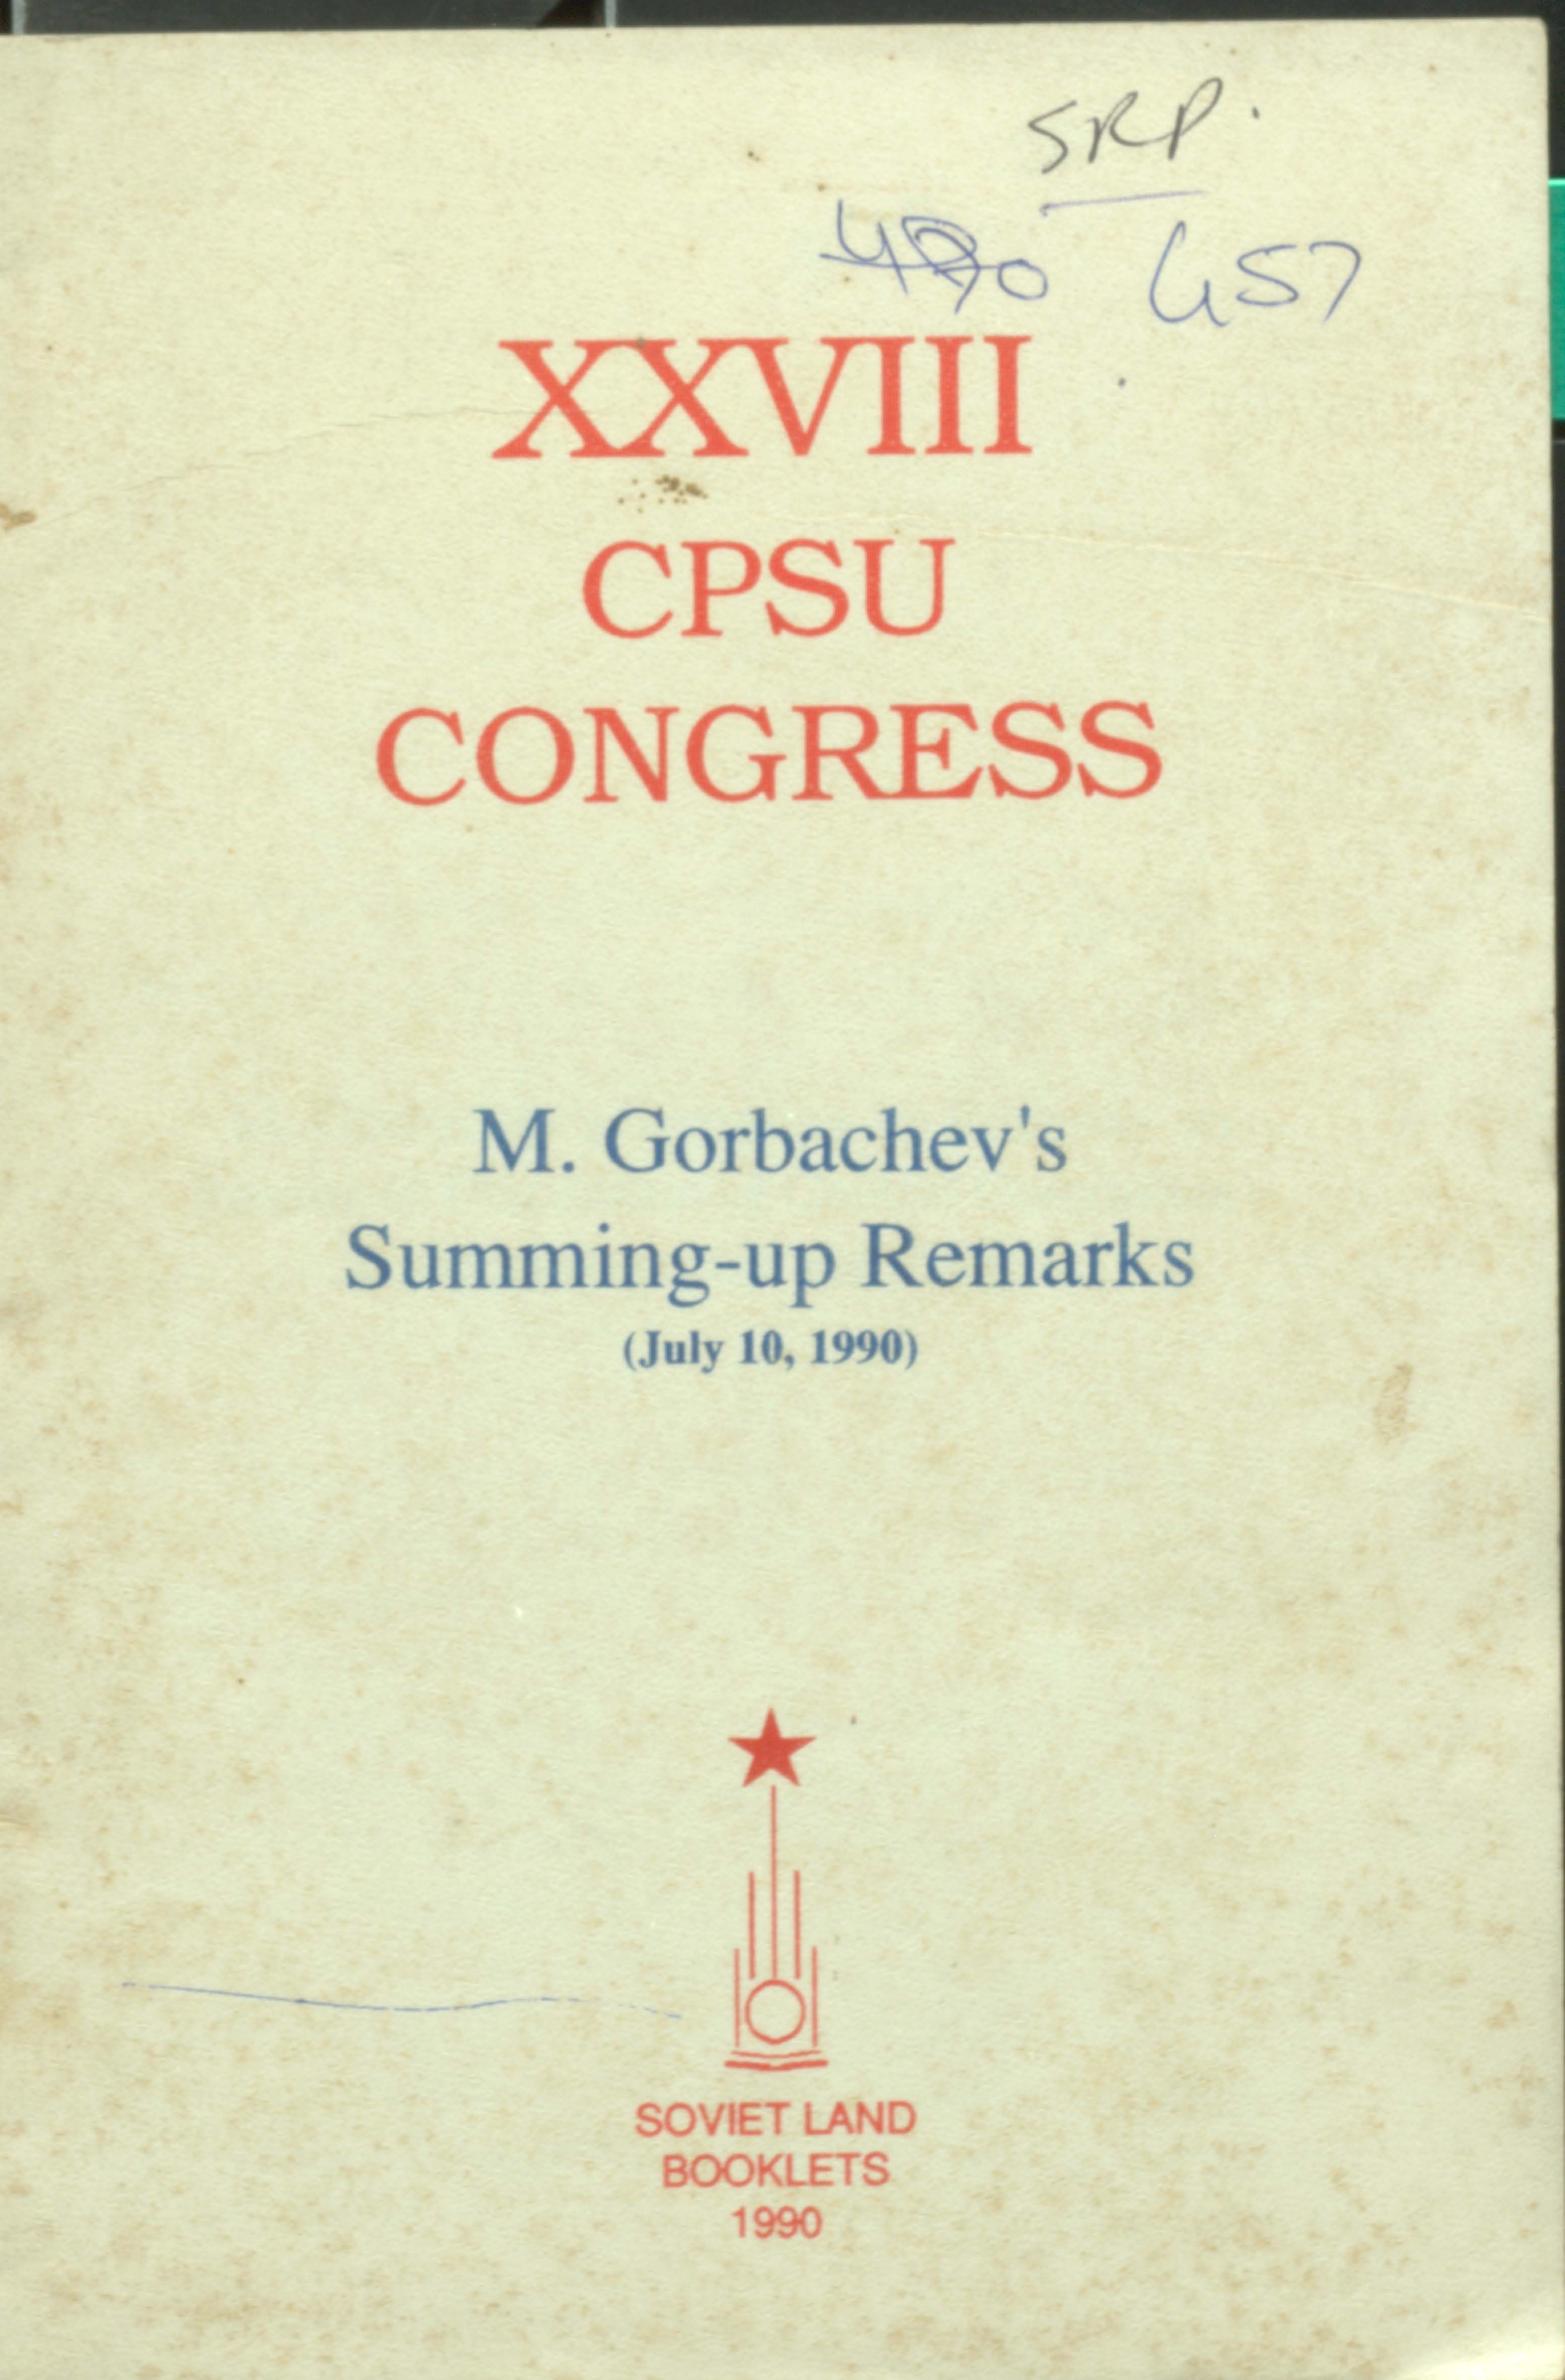 XXVII CPSU Congress (July 10, 1990)